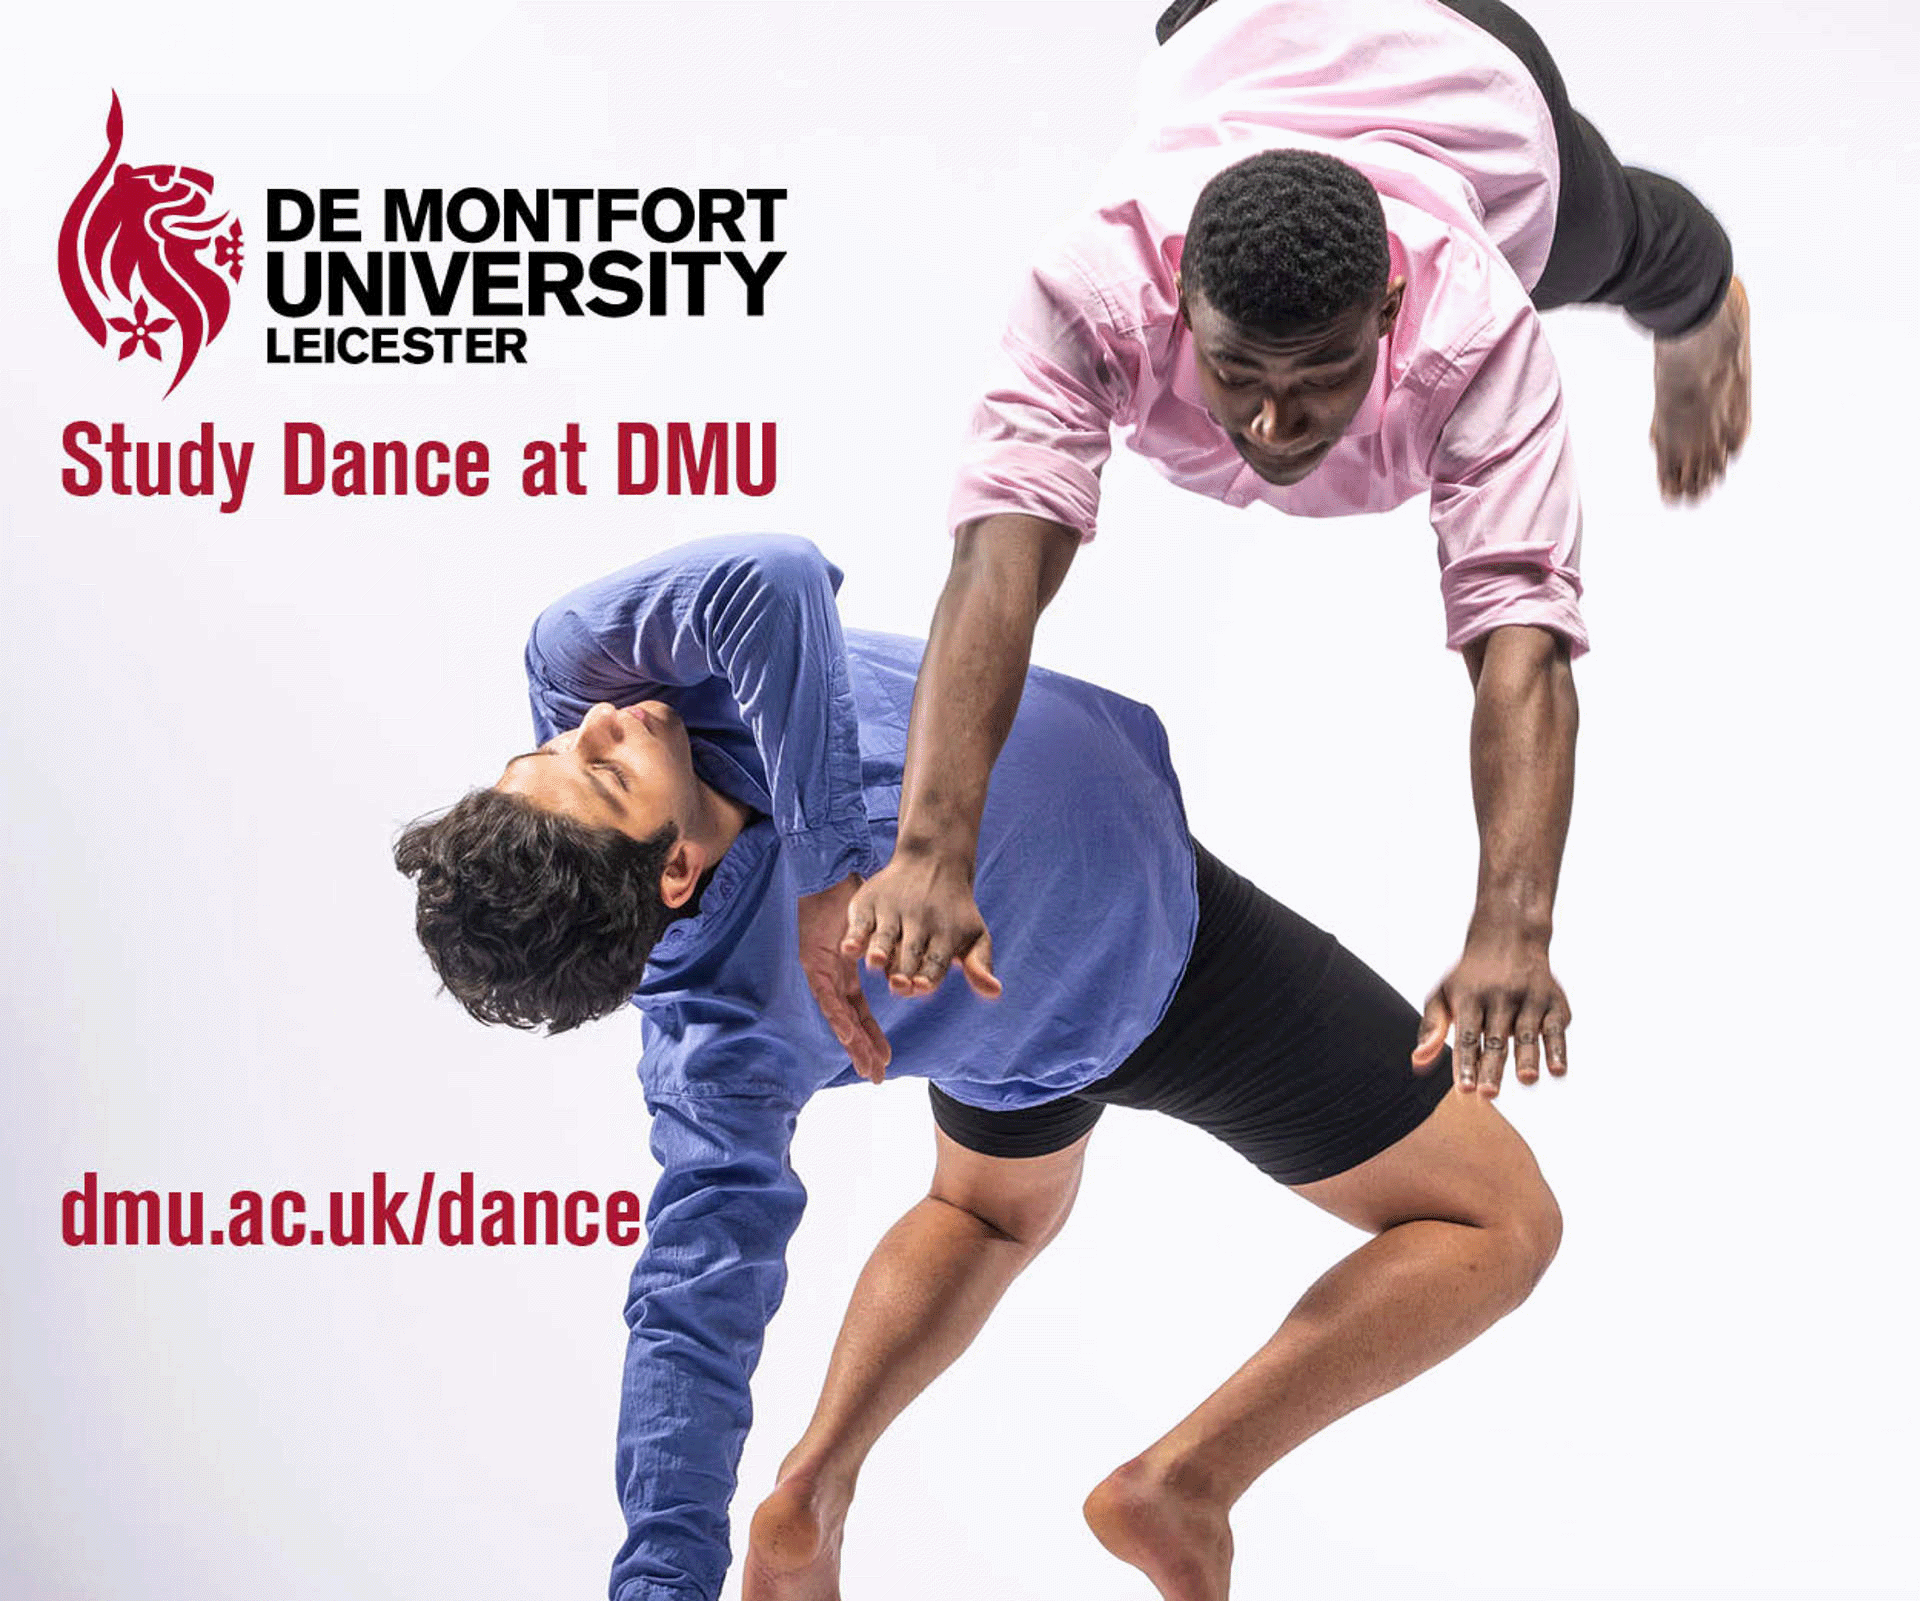 https://www.dmu.ac.uk/study/courses/undergraduate-courses/dance-ba-degree/dance-ba-degree.aspx